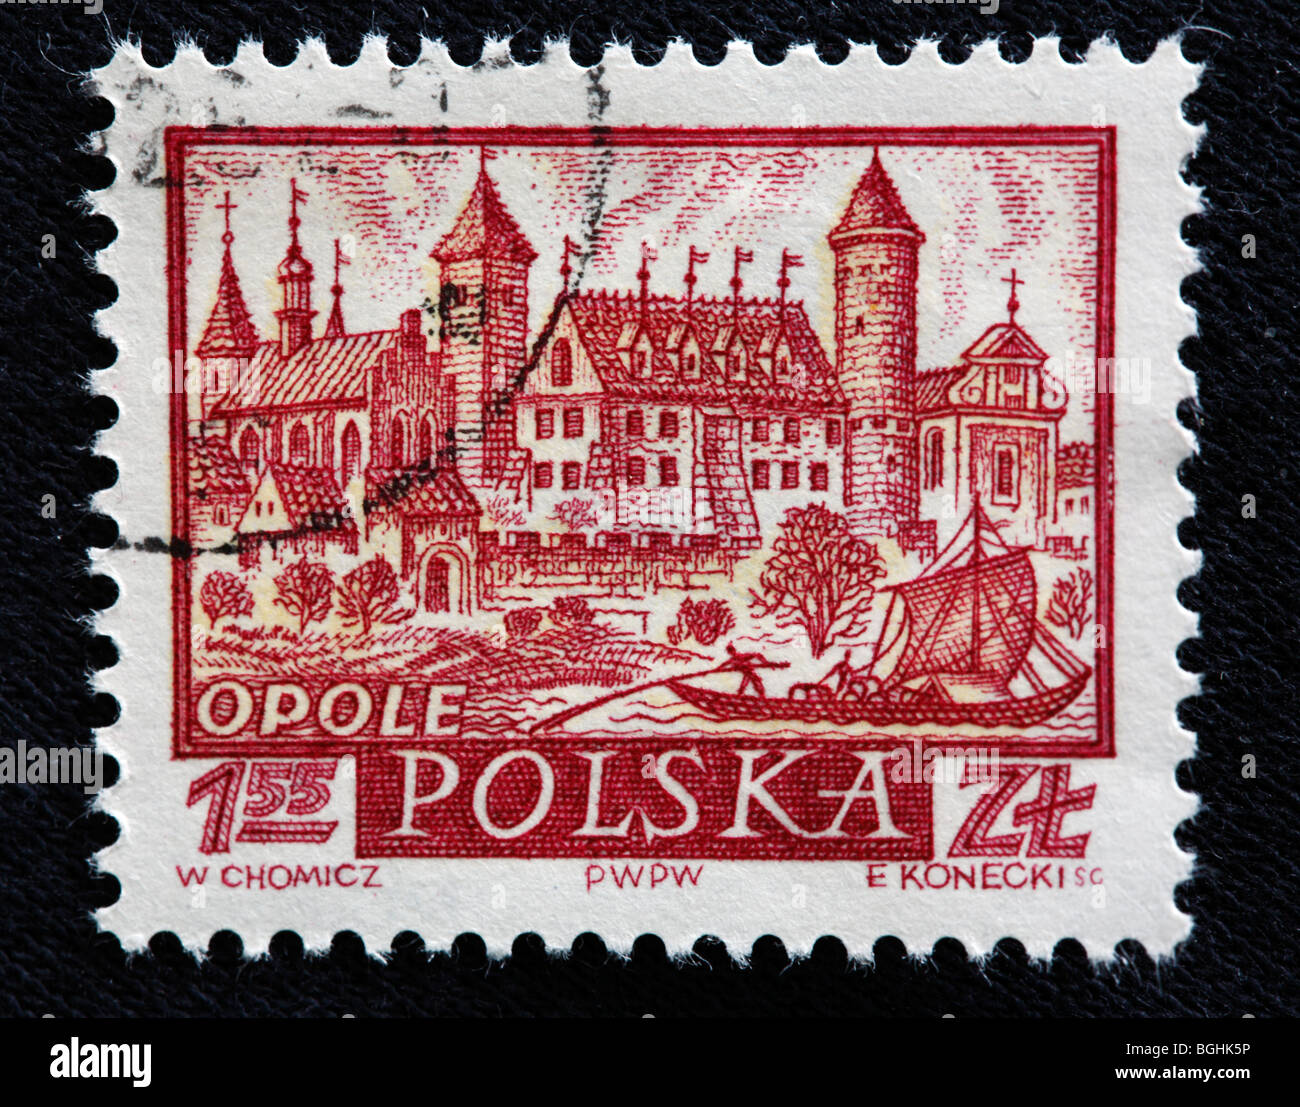 Opole, postage stamp, Poland, 1960s Stock Photo